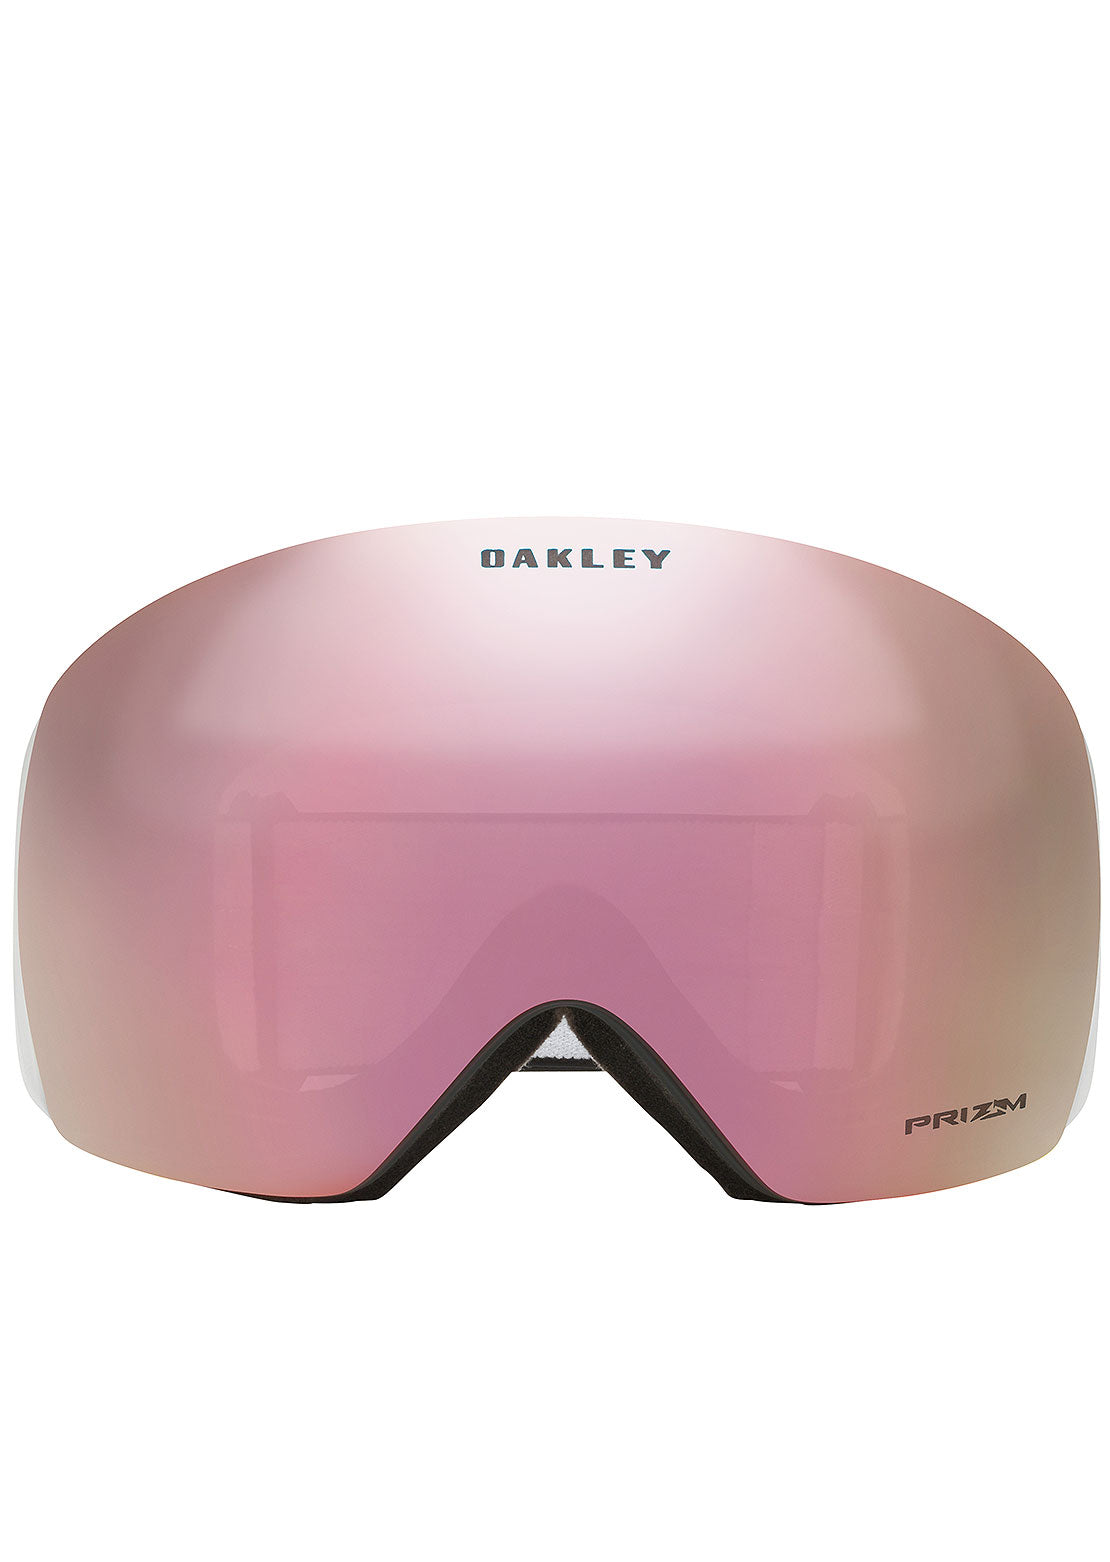 Oakley Flight Deck L Goggles Matte Black/PRIZM Hi Pink Iridium